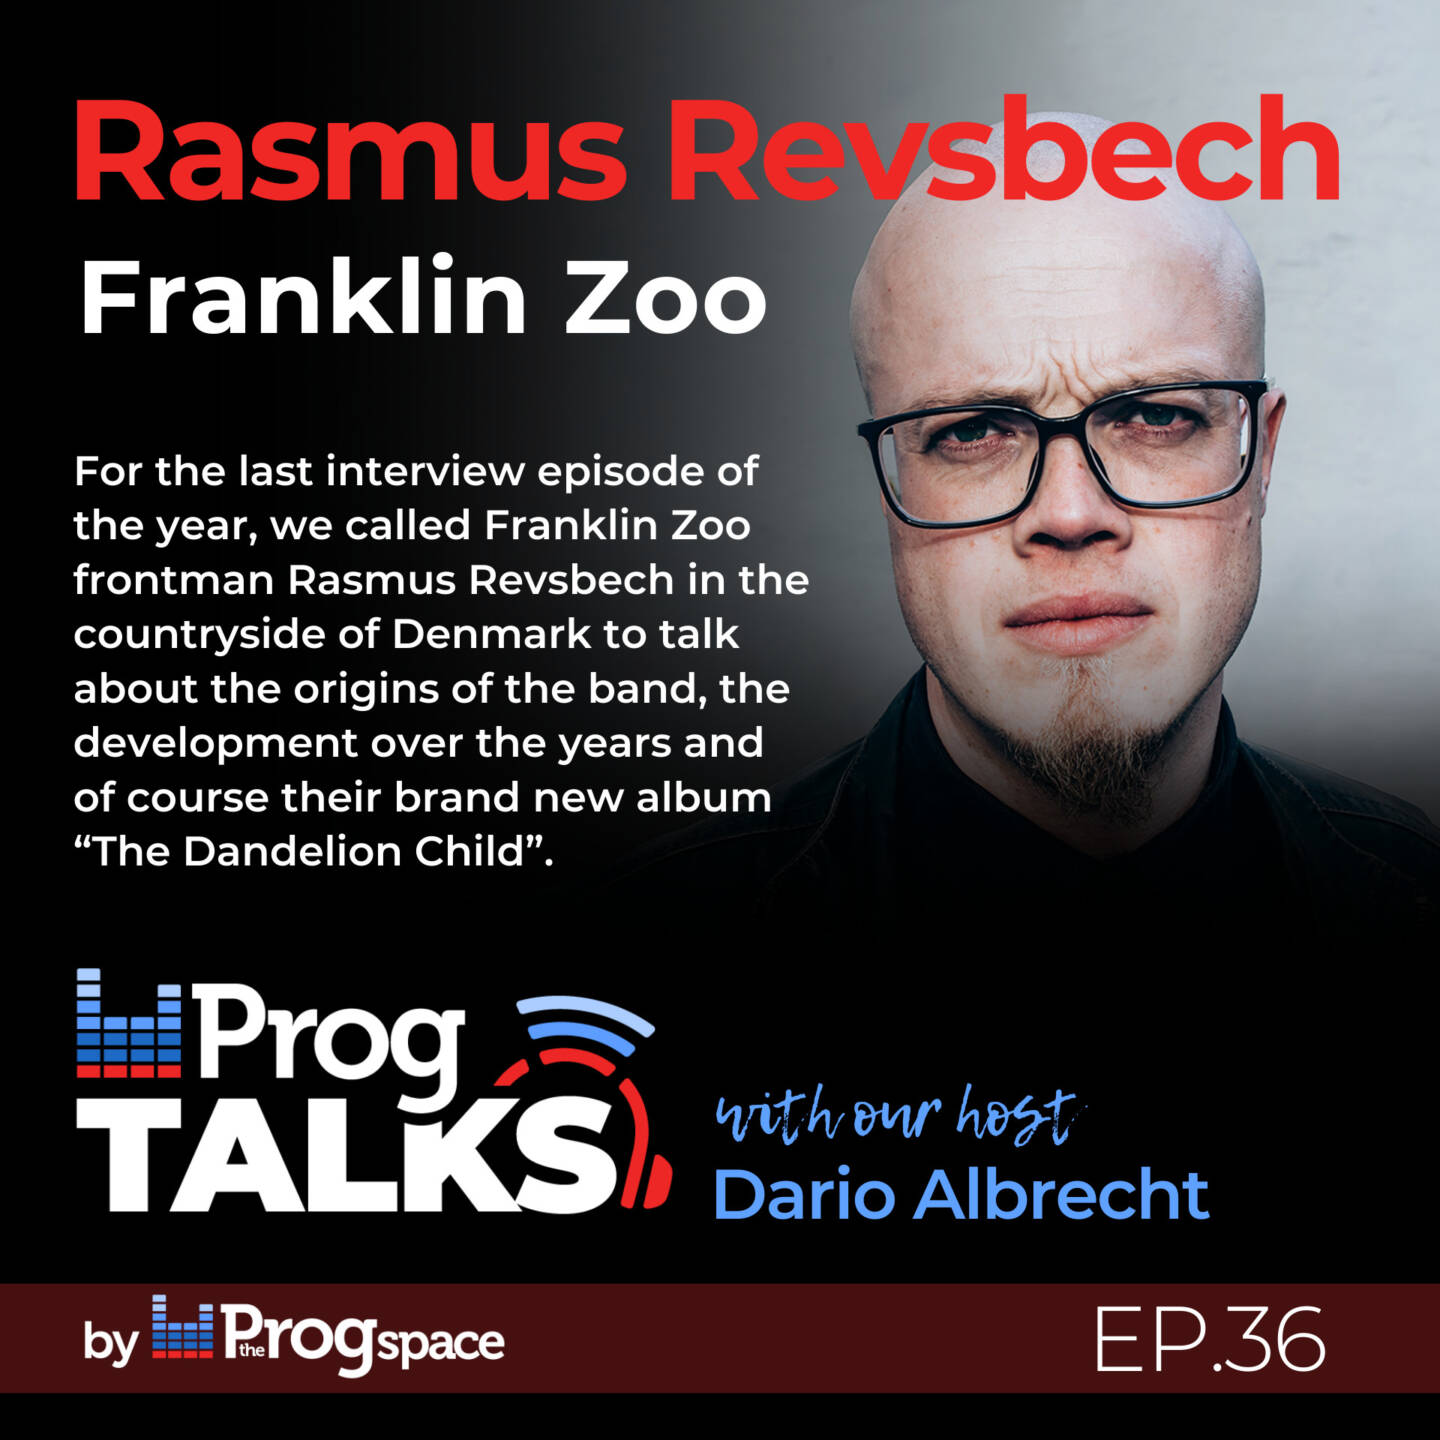 Progtalks Interviews Rasmus Revsbech (Franklin Zoo)